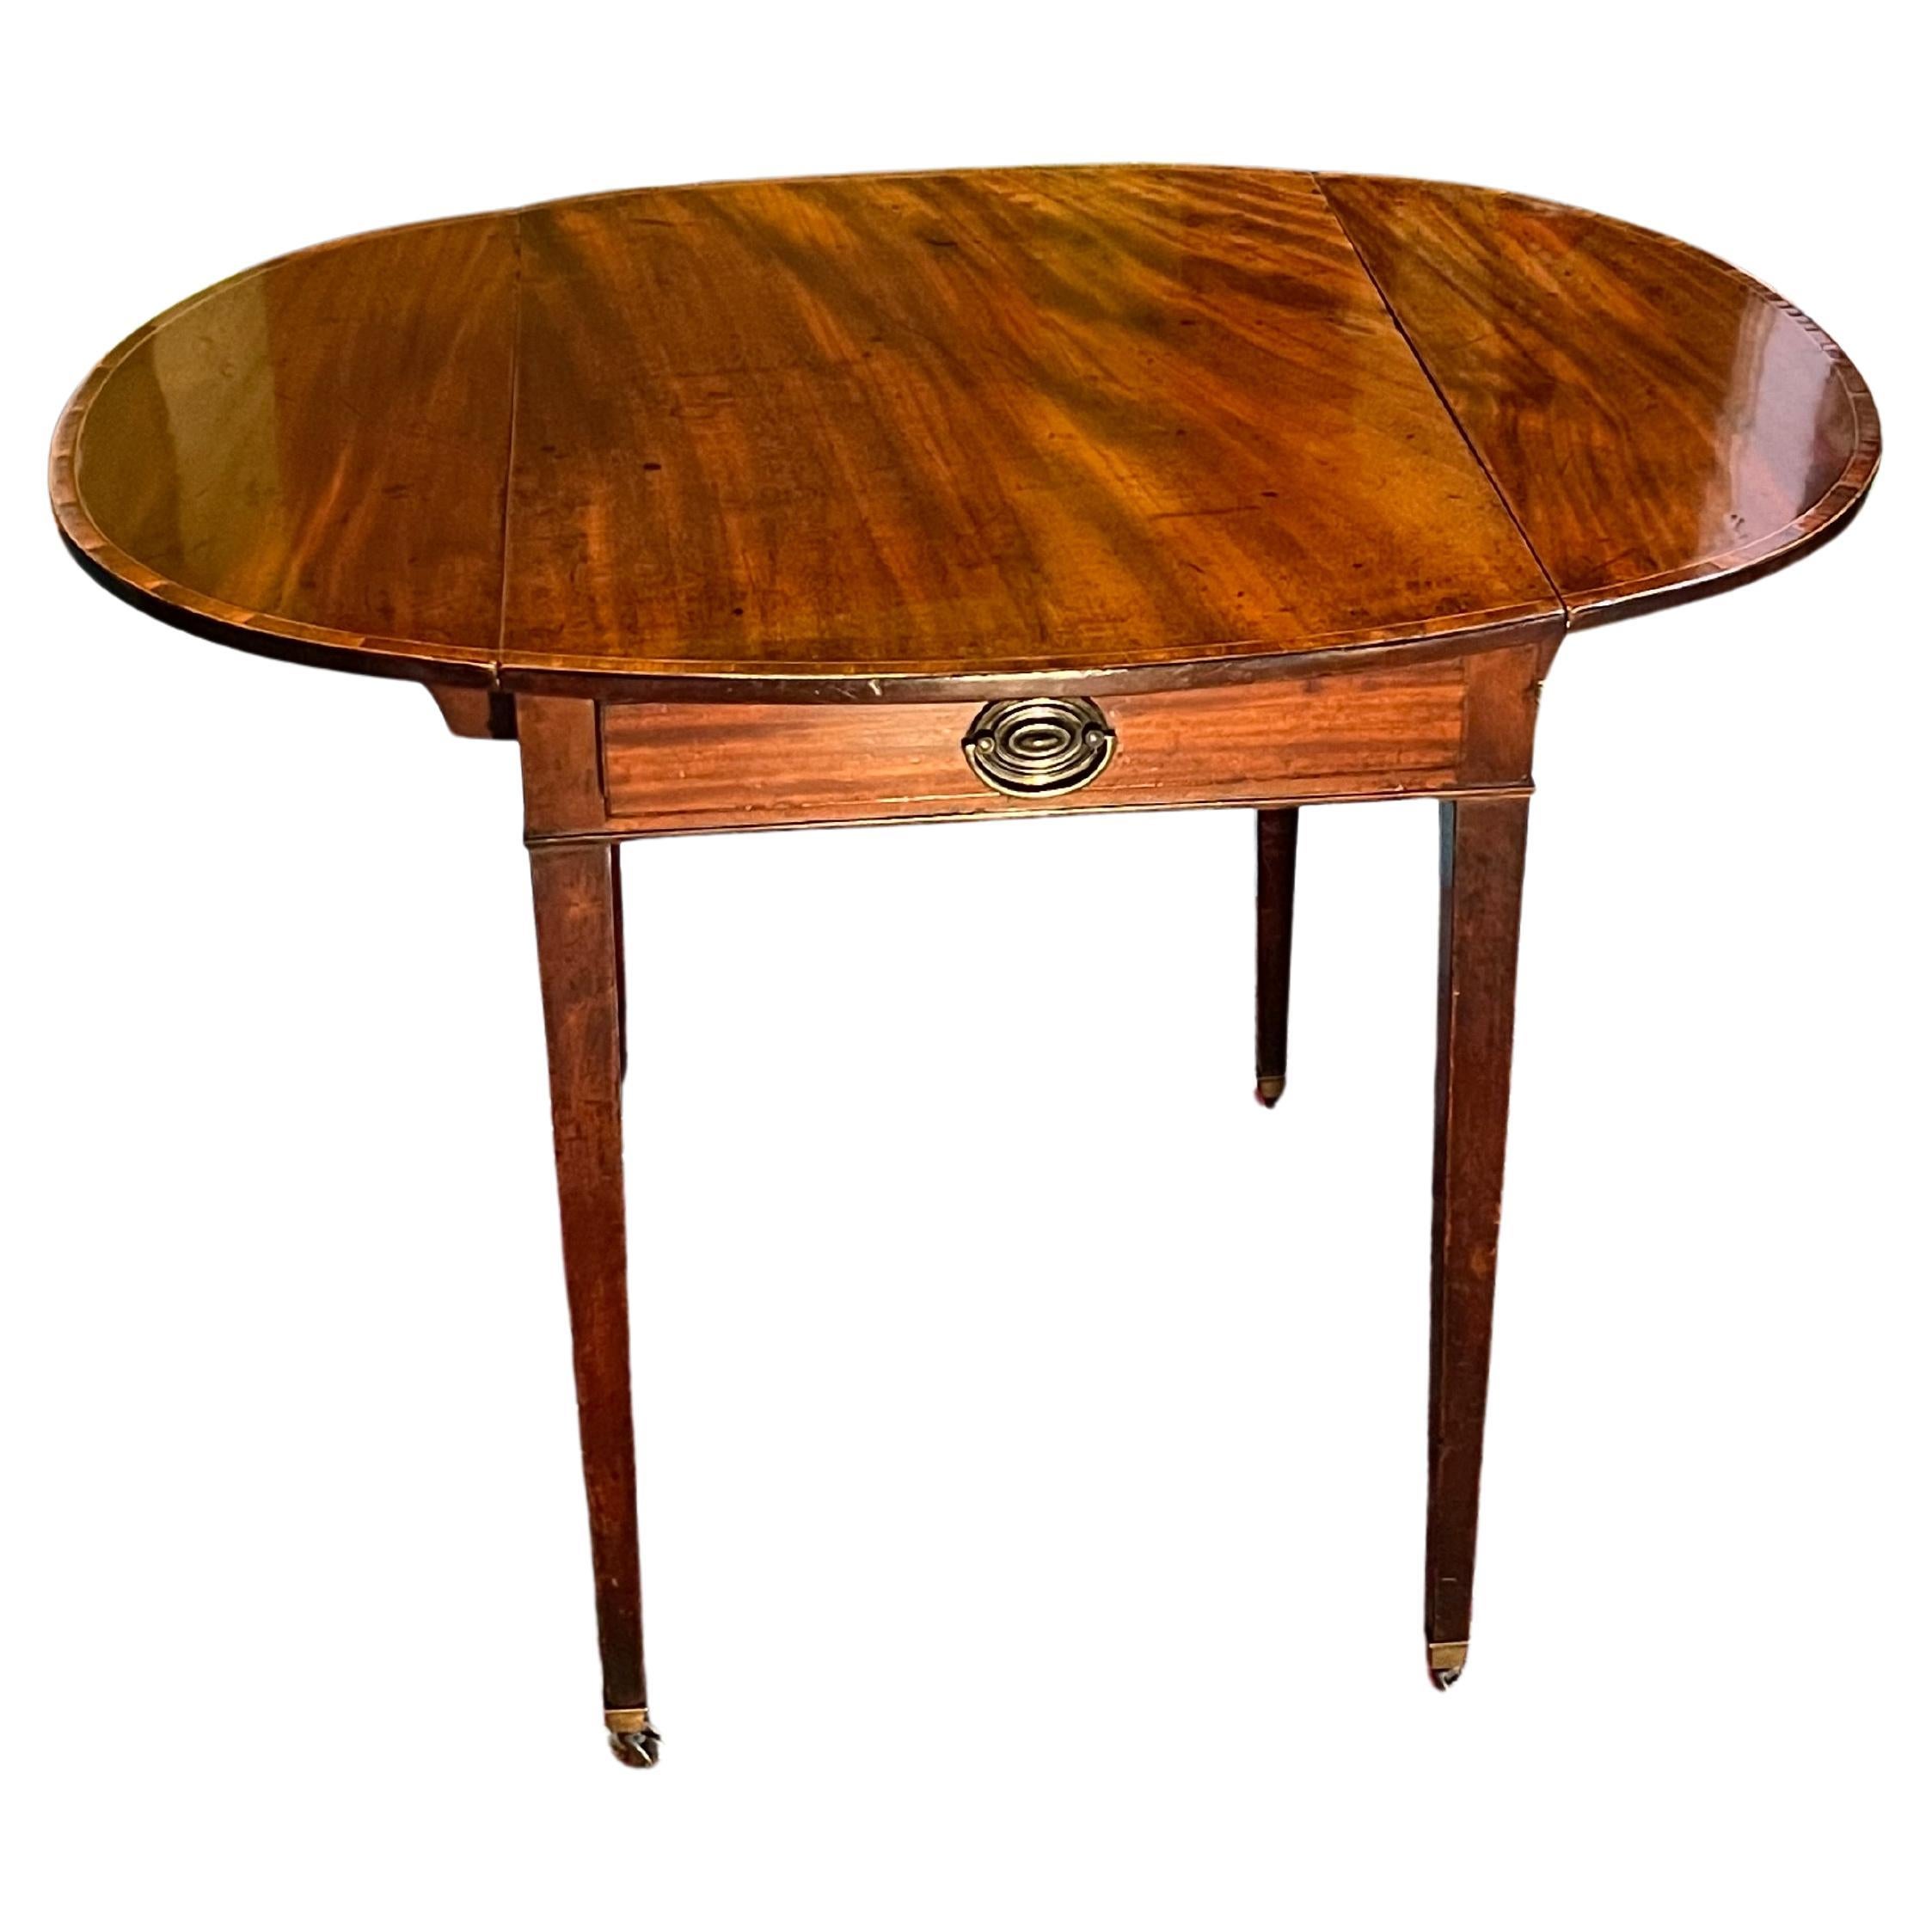 Fine English Inlaid Mahogany Hepplewhite Period Pembroke Table with Drawer